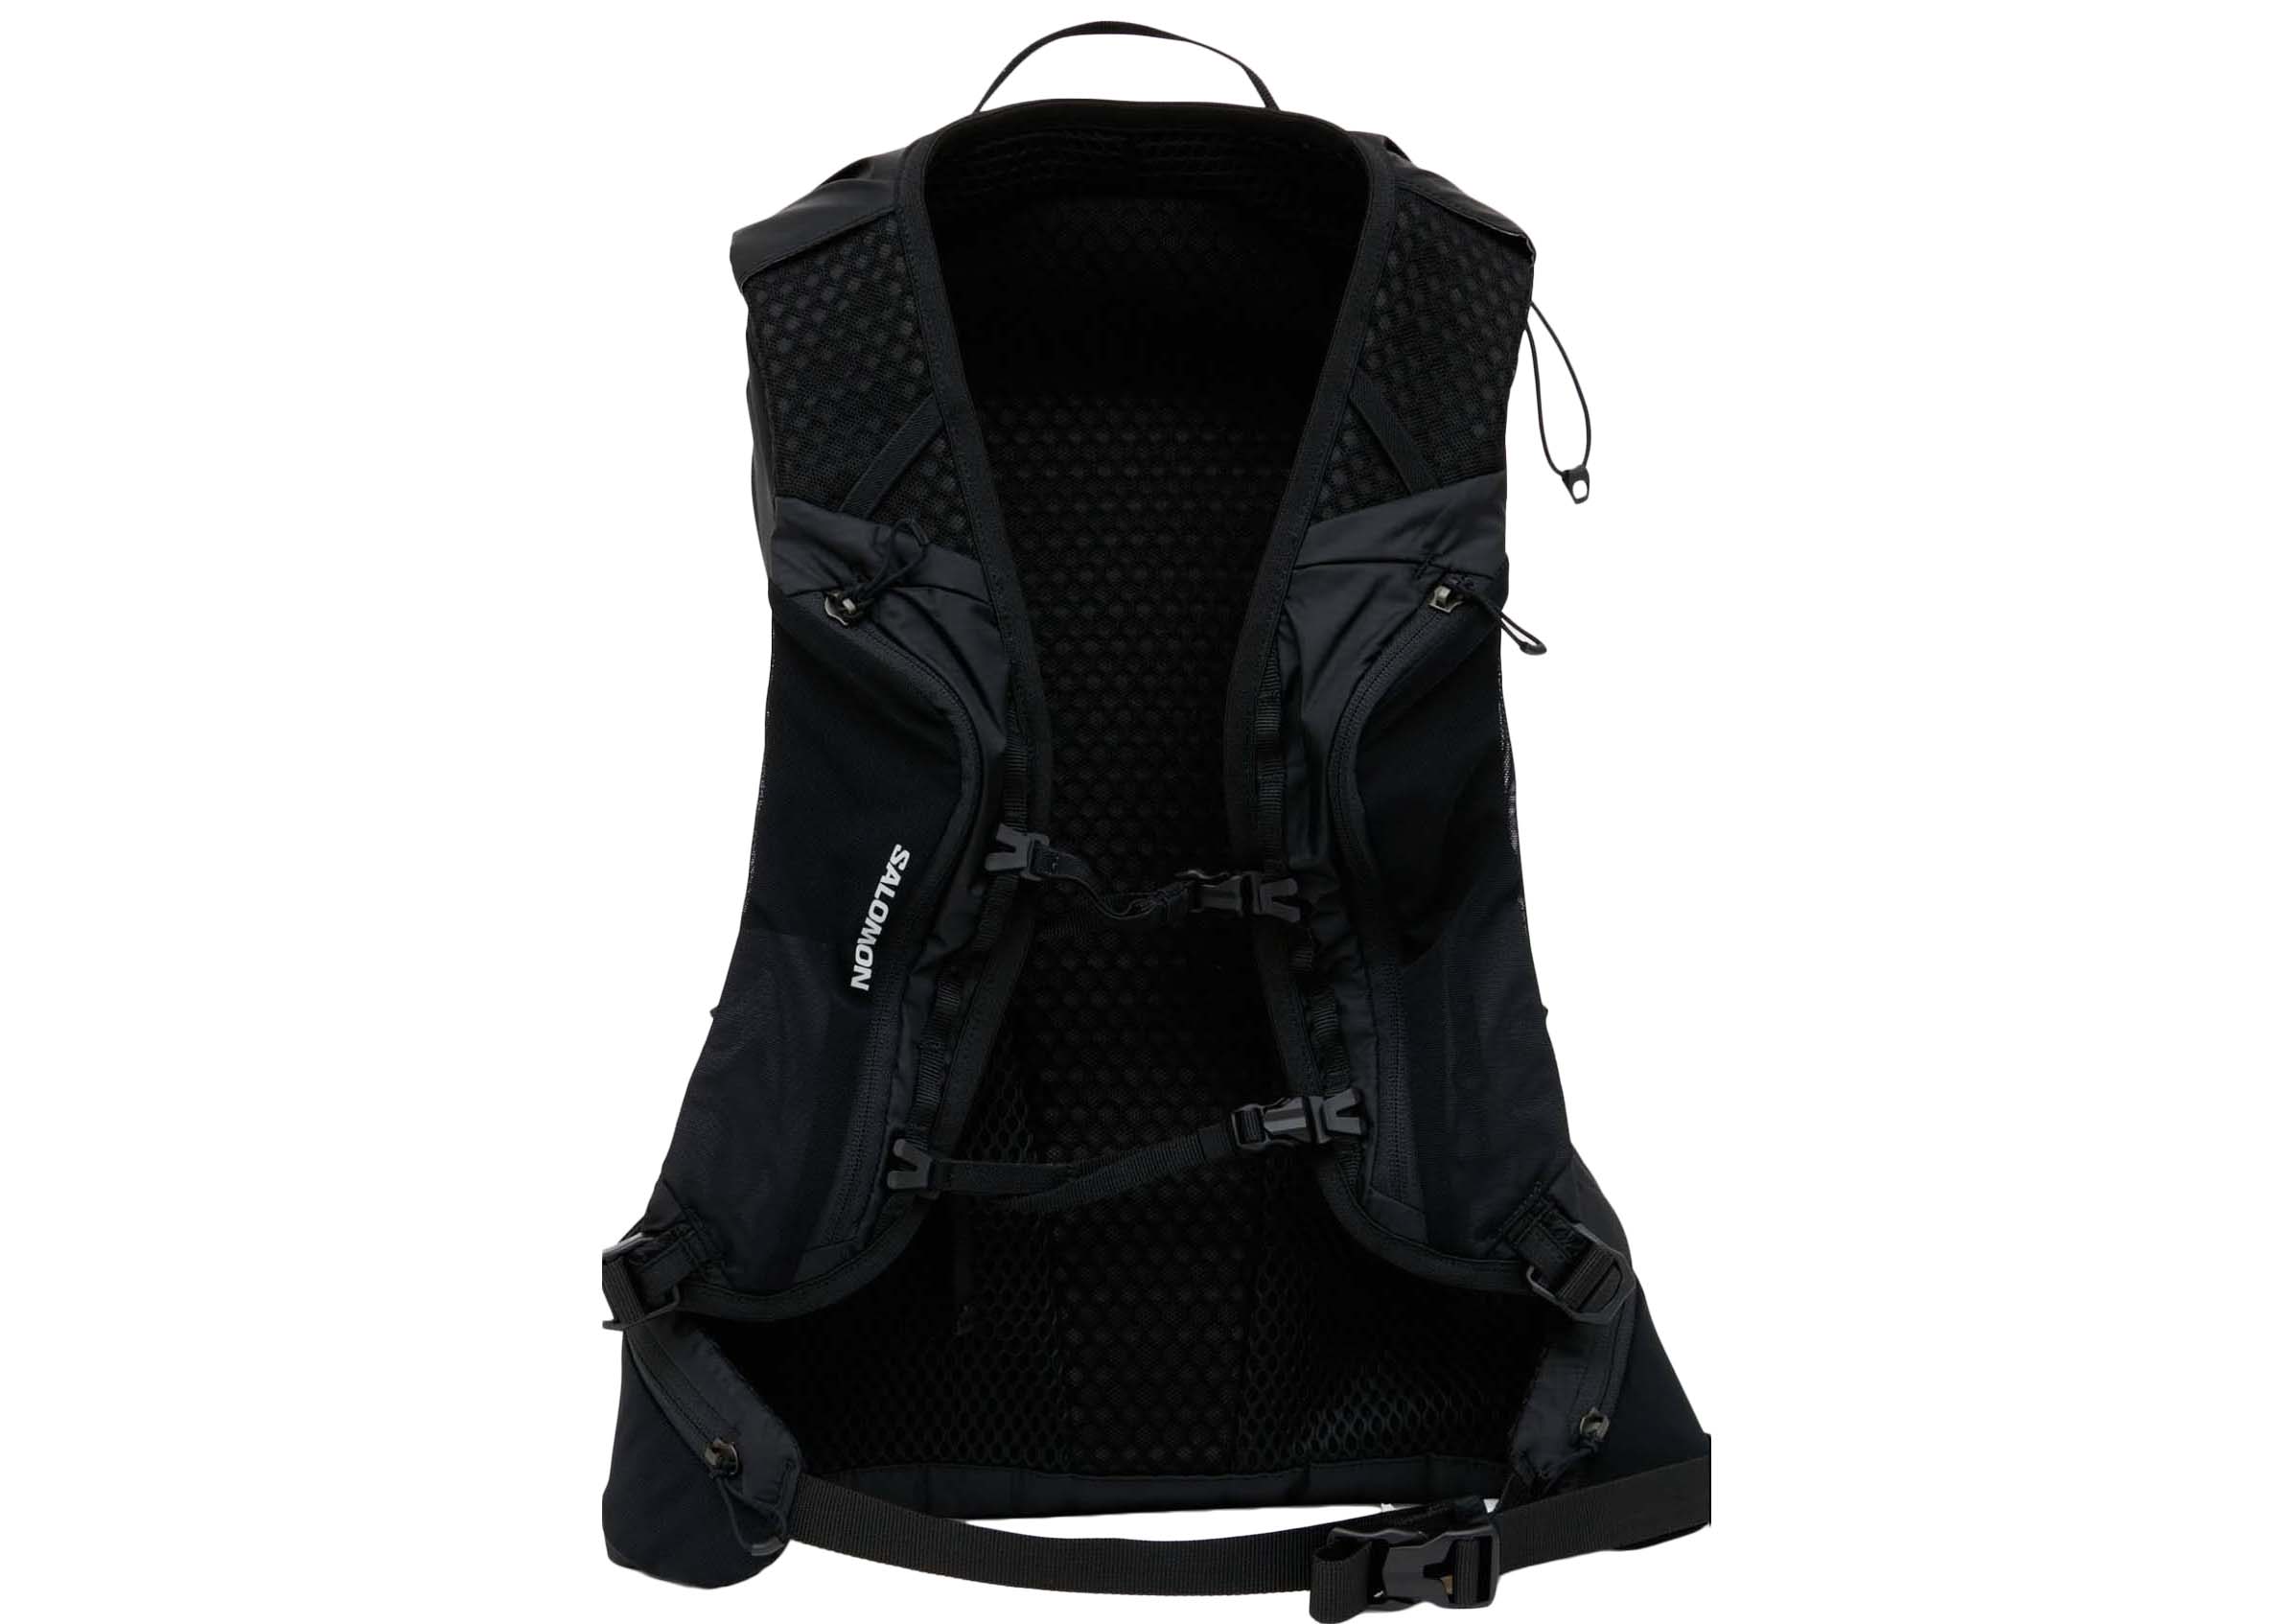 Maison Margiela x Salomon XT 15 MM6 Backpack Black in Leather - US